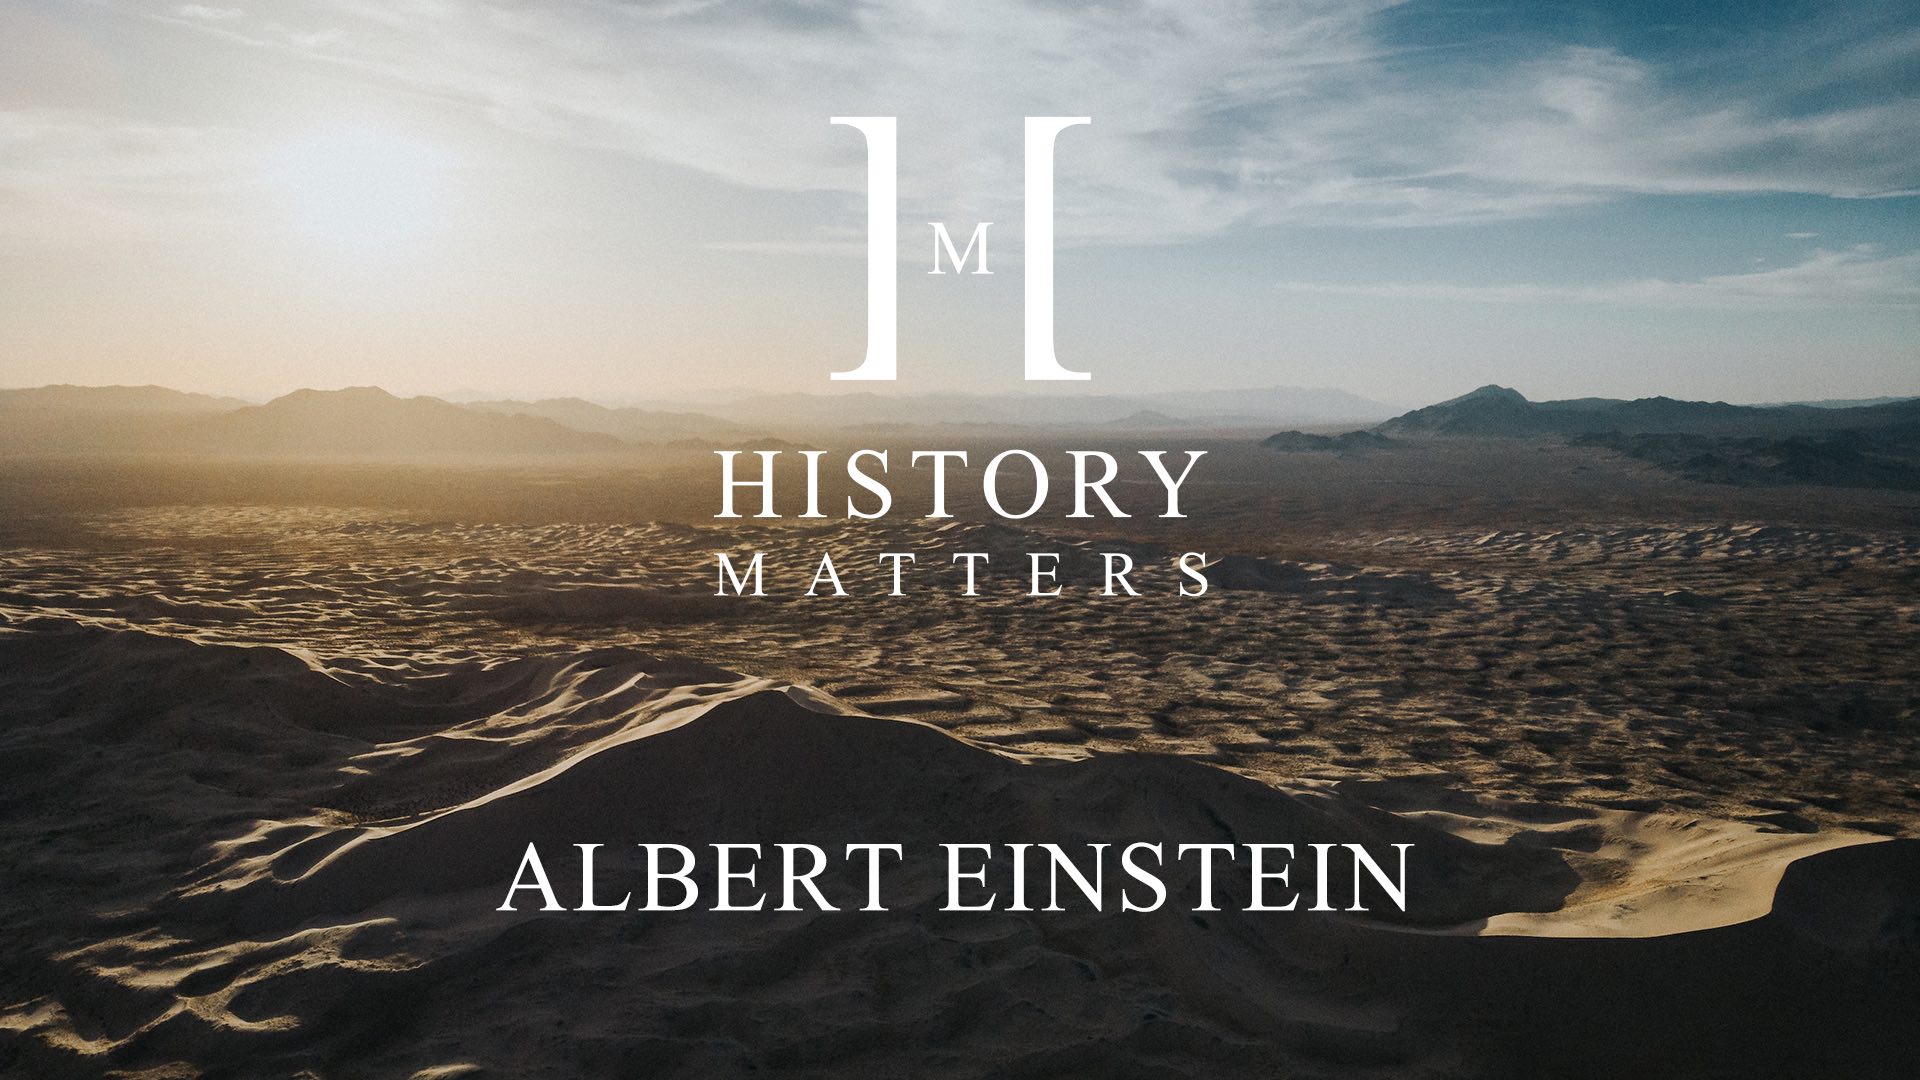 White HM Albert Einstein logo with background of sand dunes and mountains in a desert